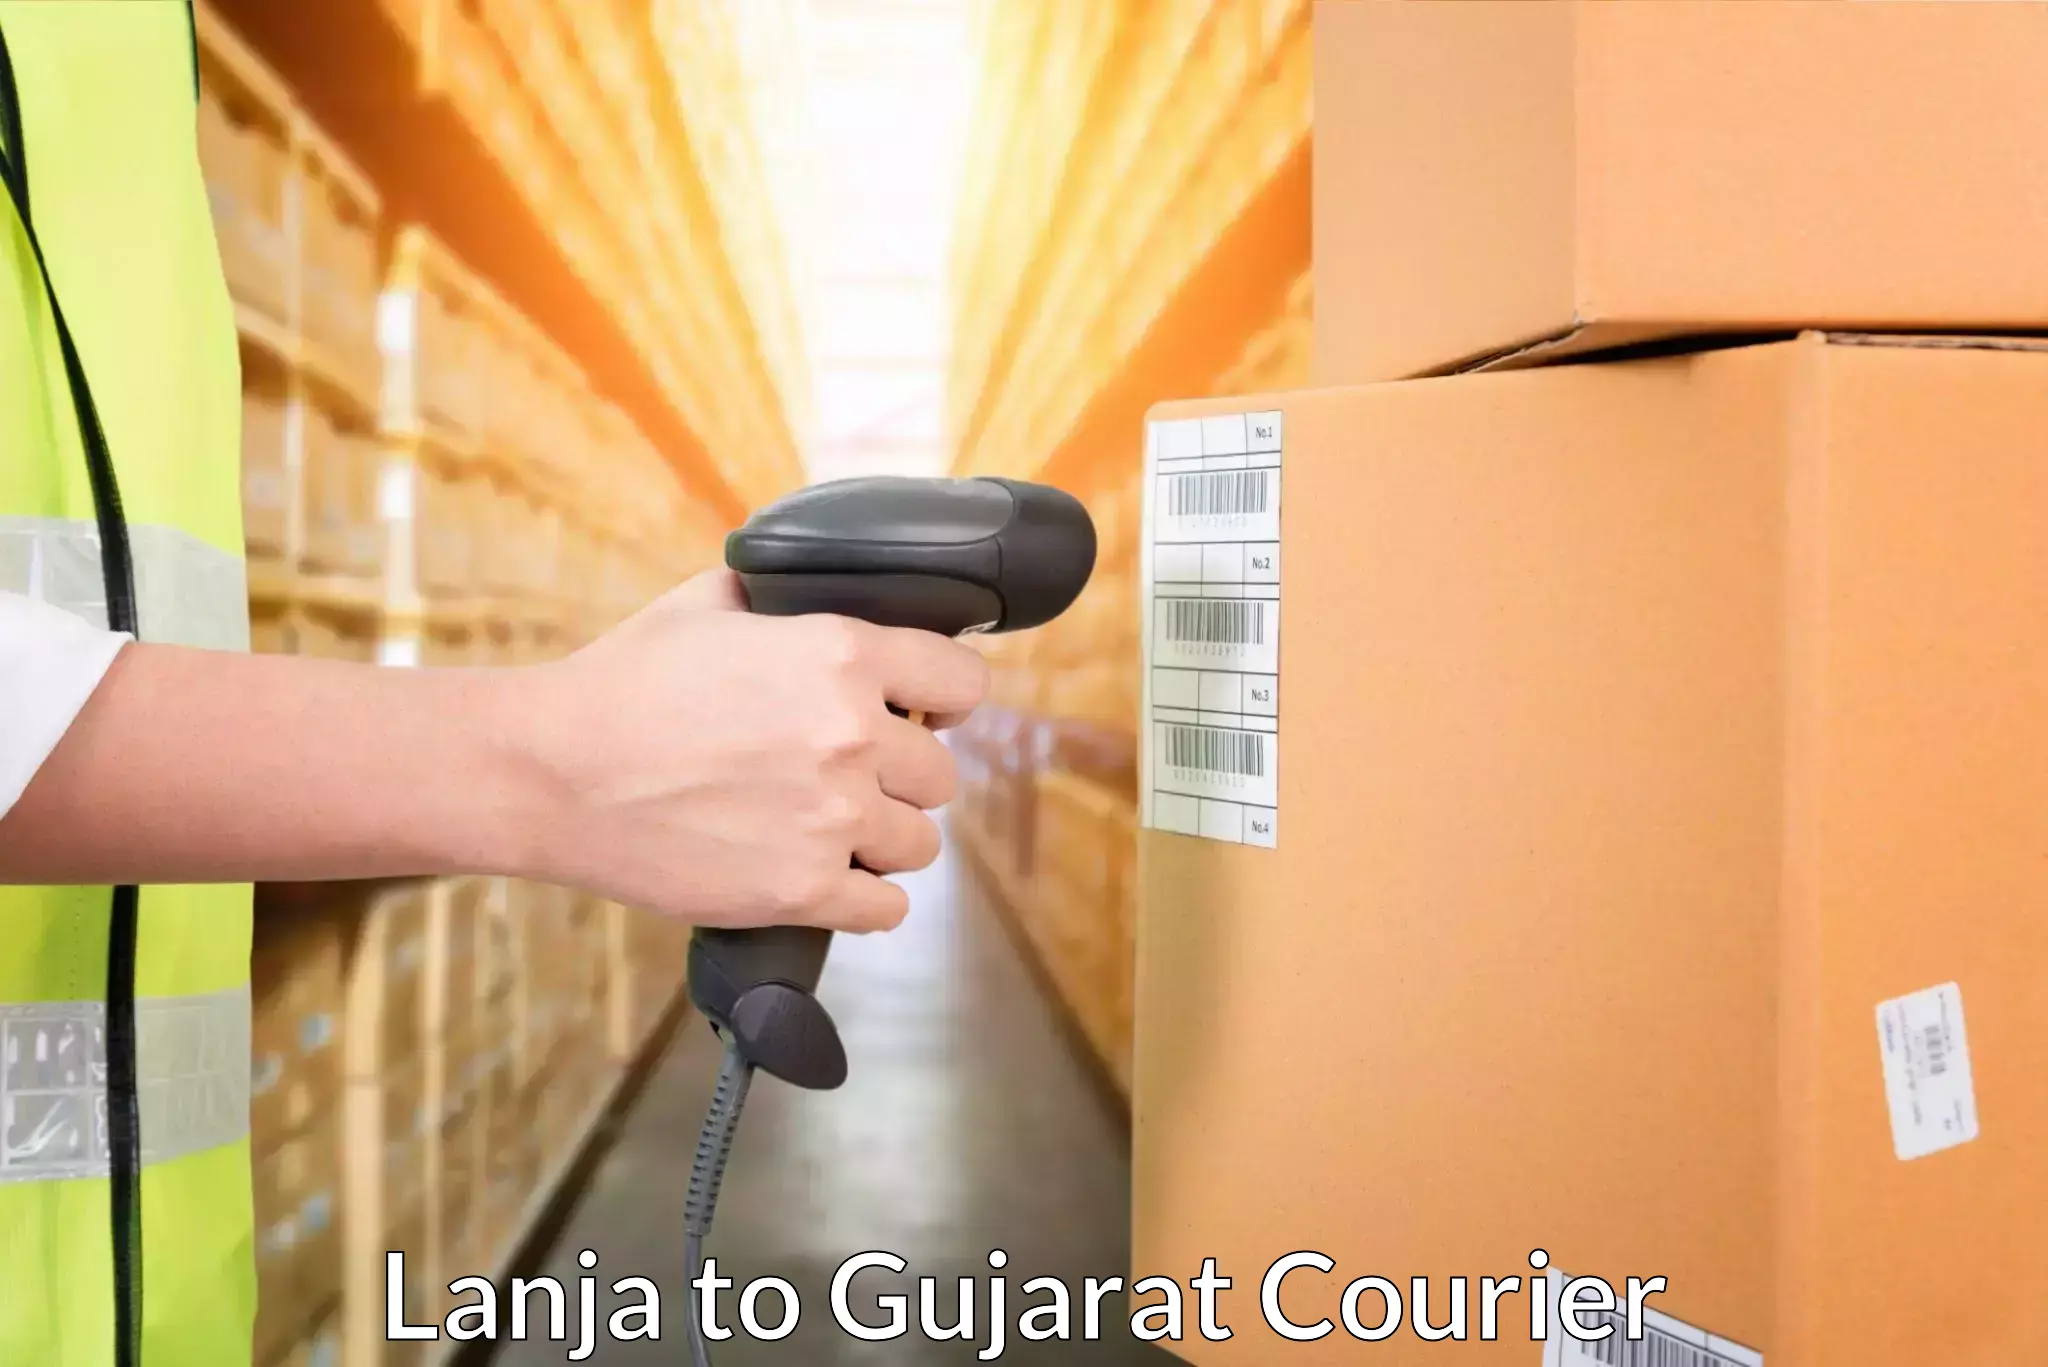 Courier service comparison Lanja to Vyara